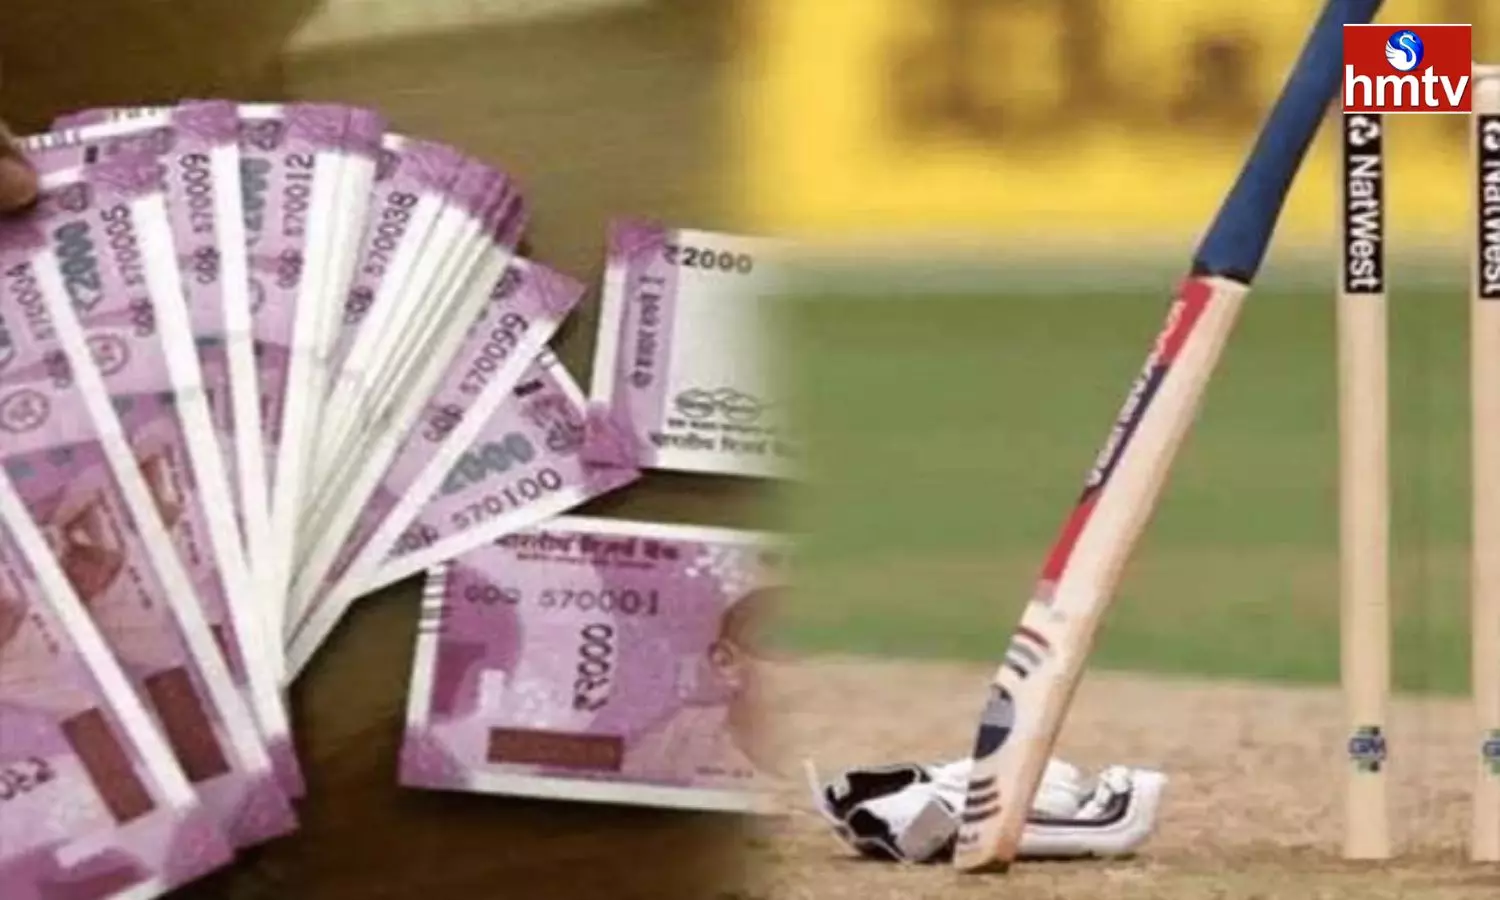 International Cricket Betting Gang Arrested in Visakhapatnam